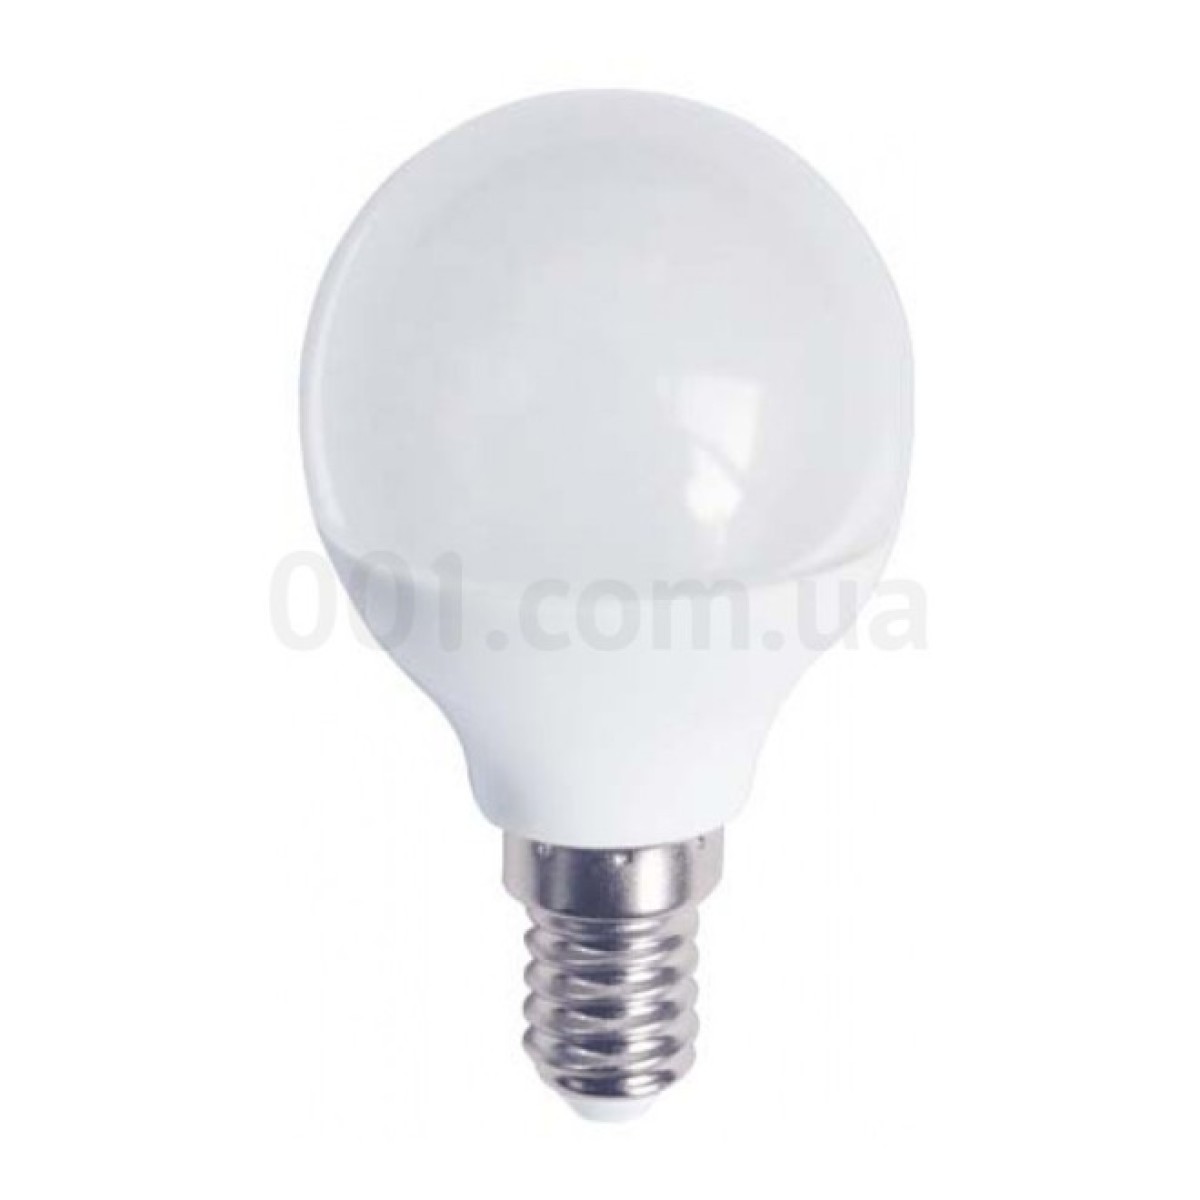 Светодиодная лампа LB-745 P45 (шар) 6Вт 4000K E14, Feron 256_256.jpg